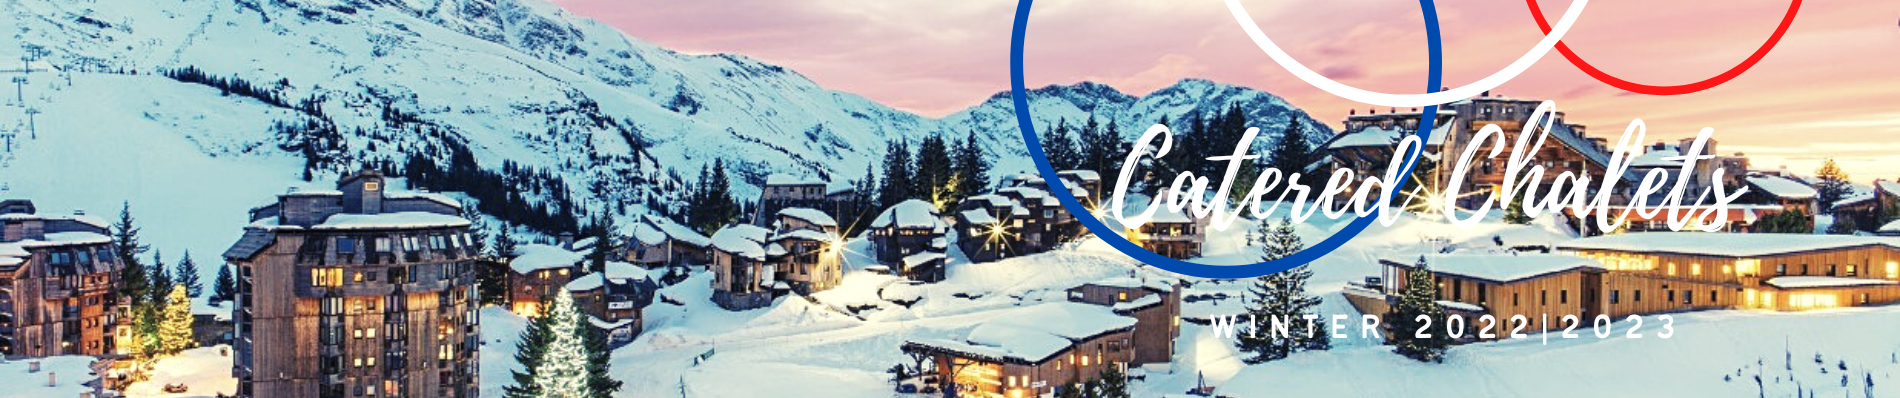 CHALET COLLECTIE frankrijk franse alpen wintersport ski